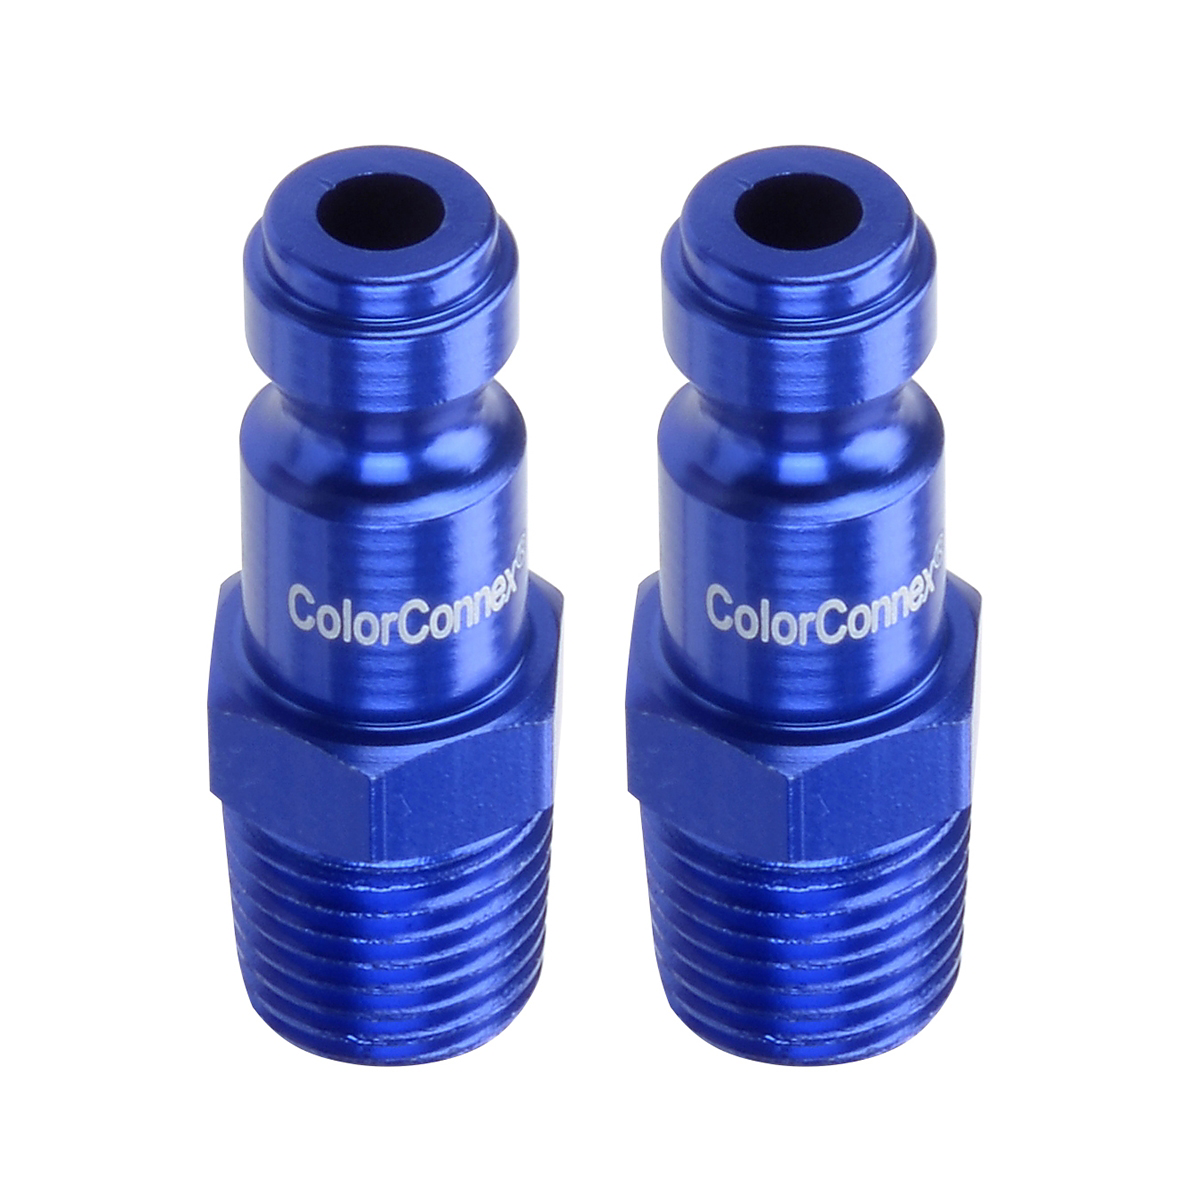 ColorConnex Type C 1/4 Inch Body Plug Blue 1/4 Inc...